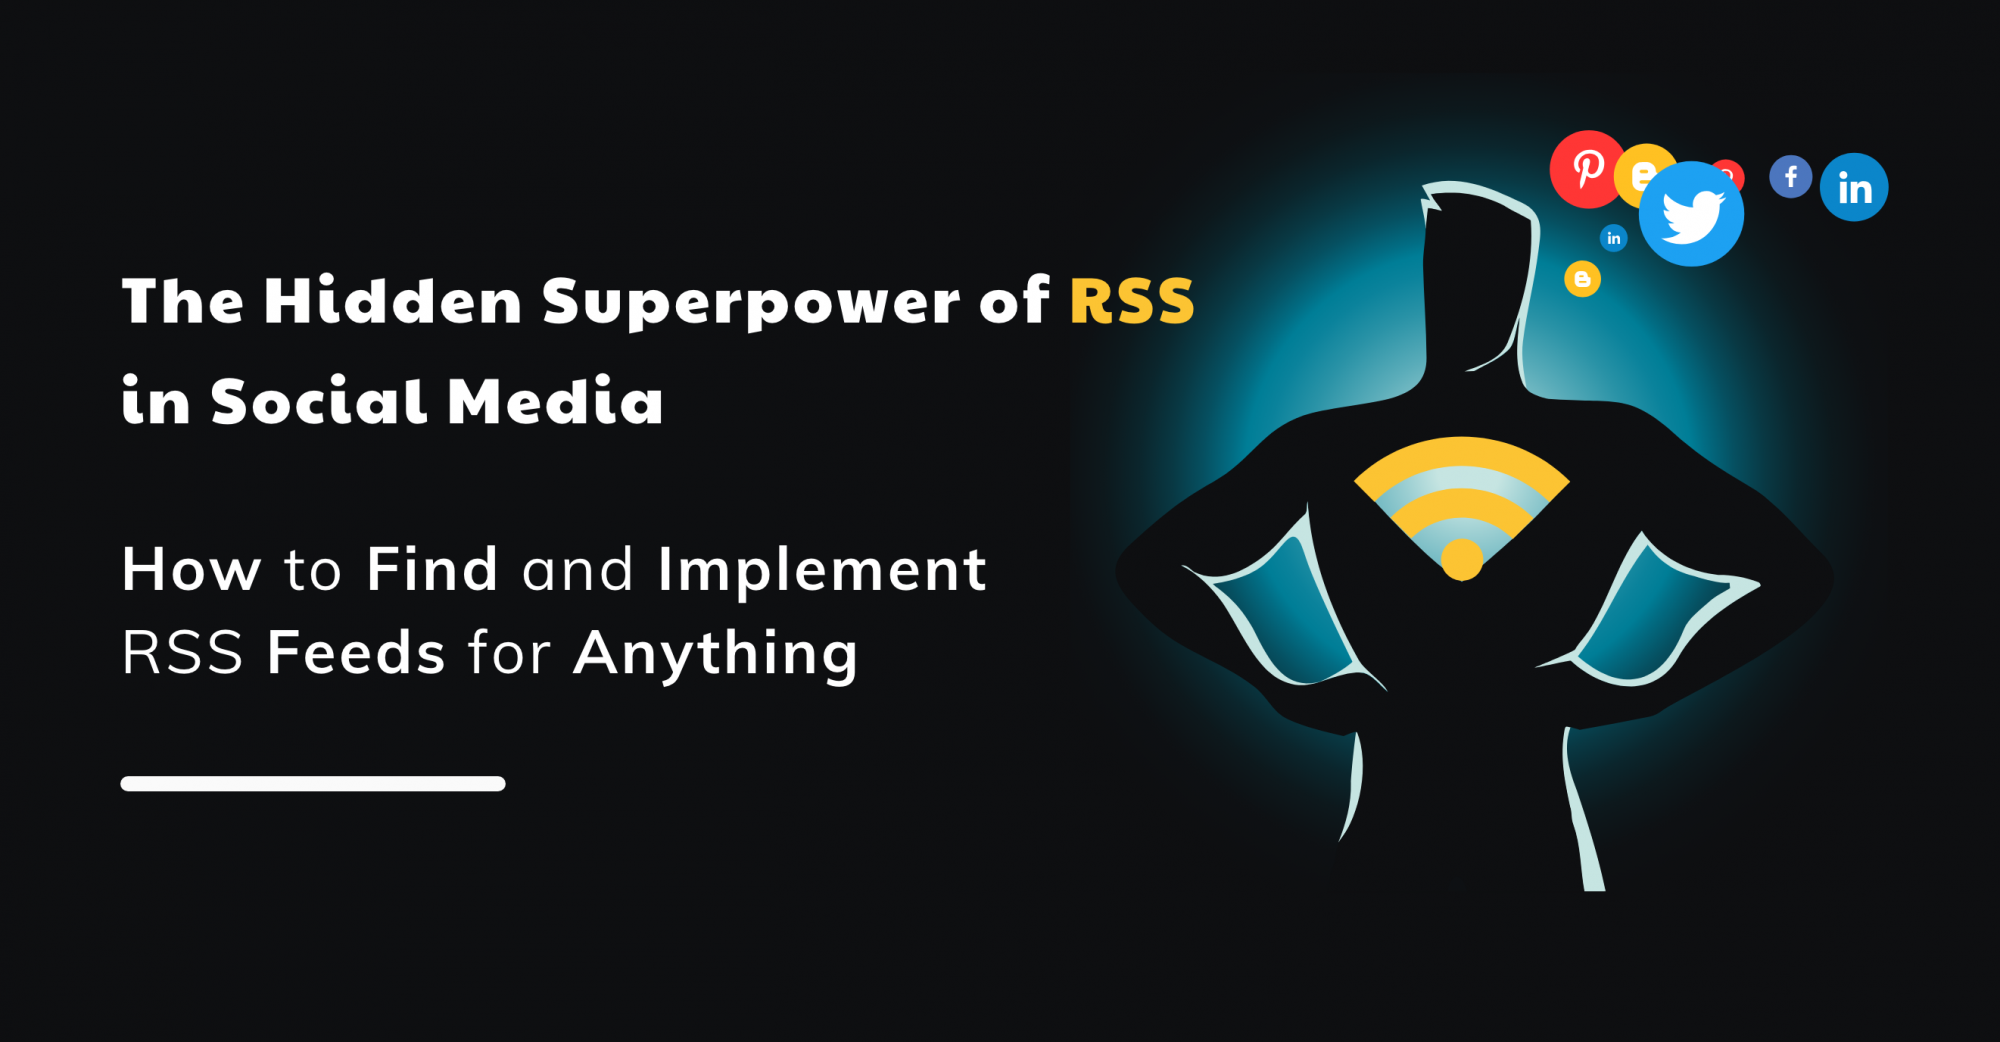 Superpower of RSS- ContentStudio